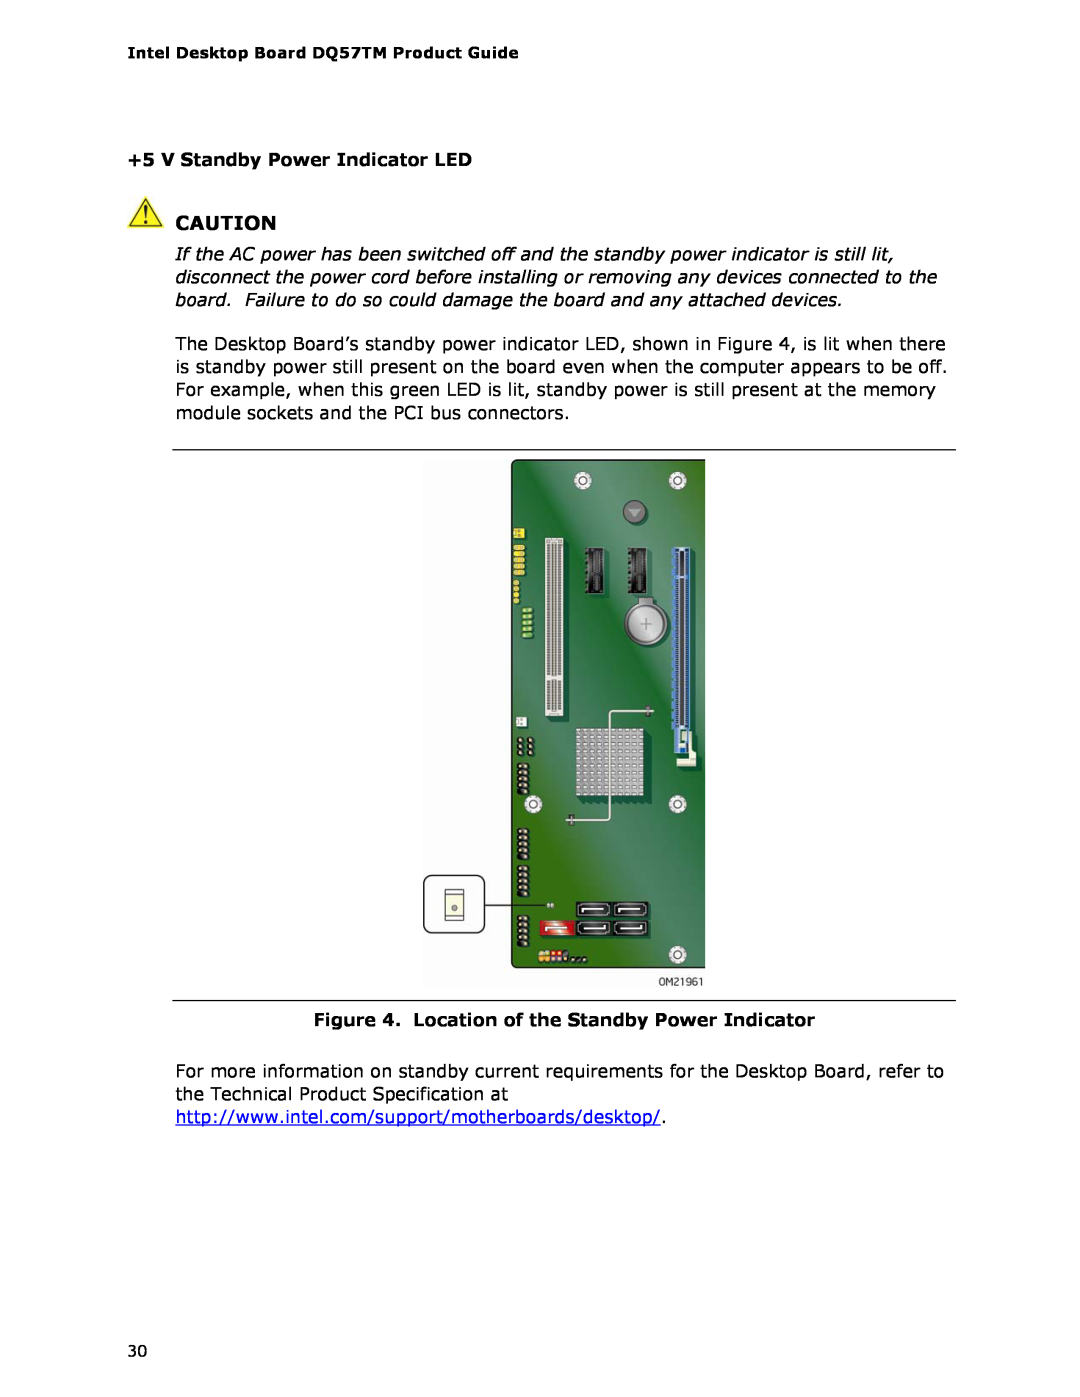 Intel DQ57TM manual +5 V Standby Power Indicator LED, Location of the Standby Power Indicator 